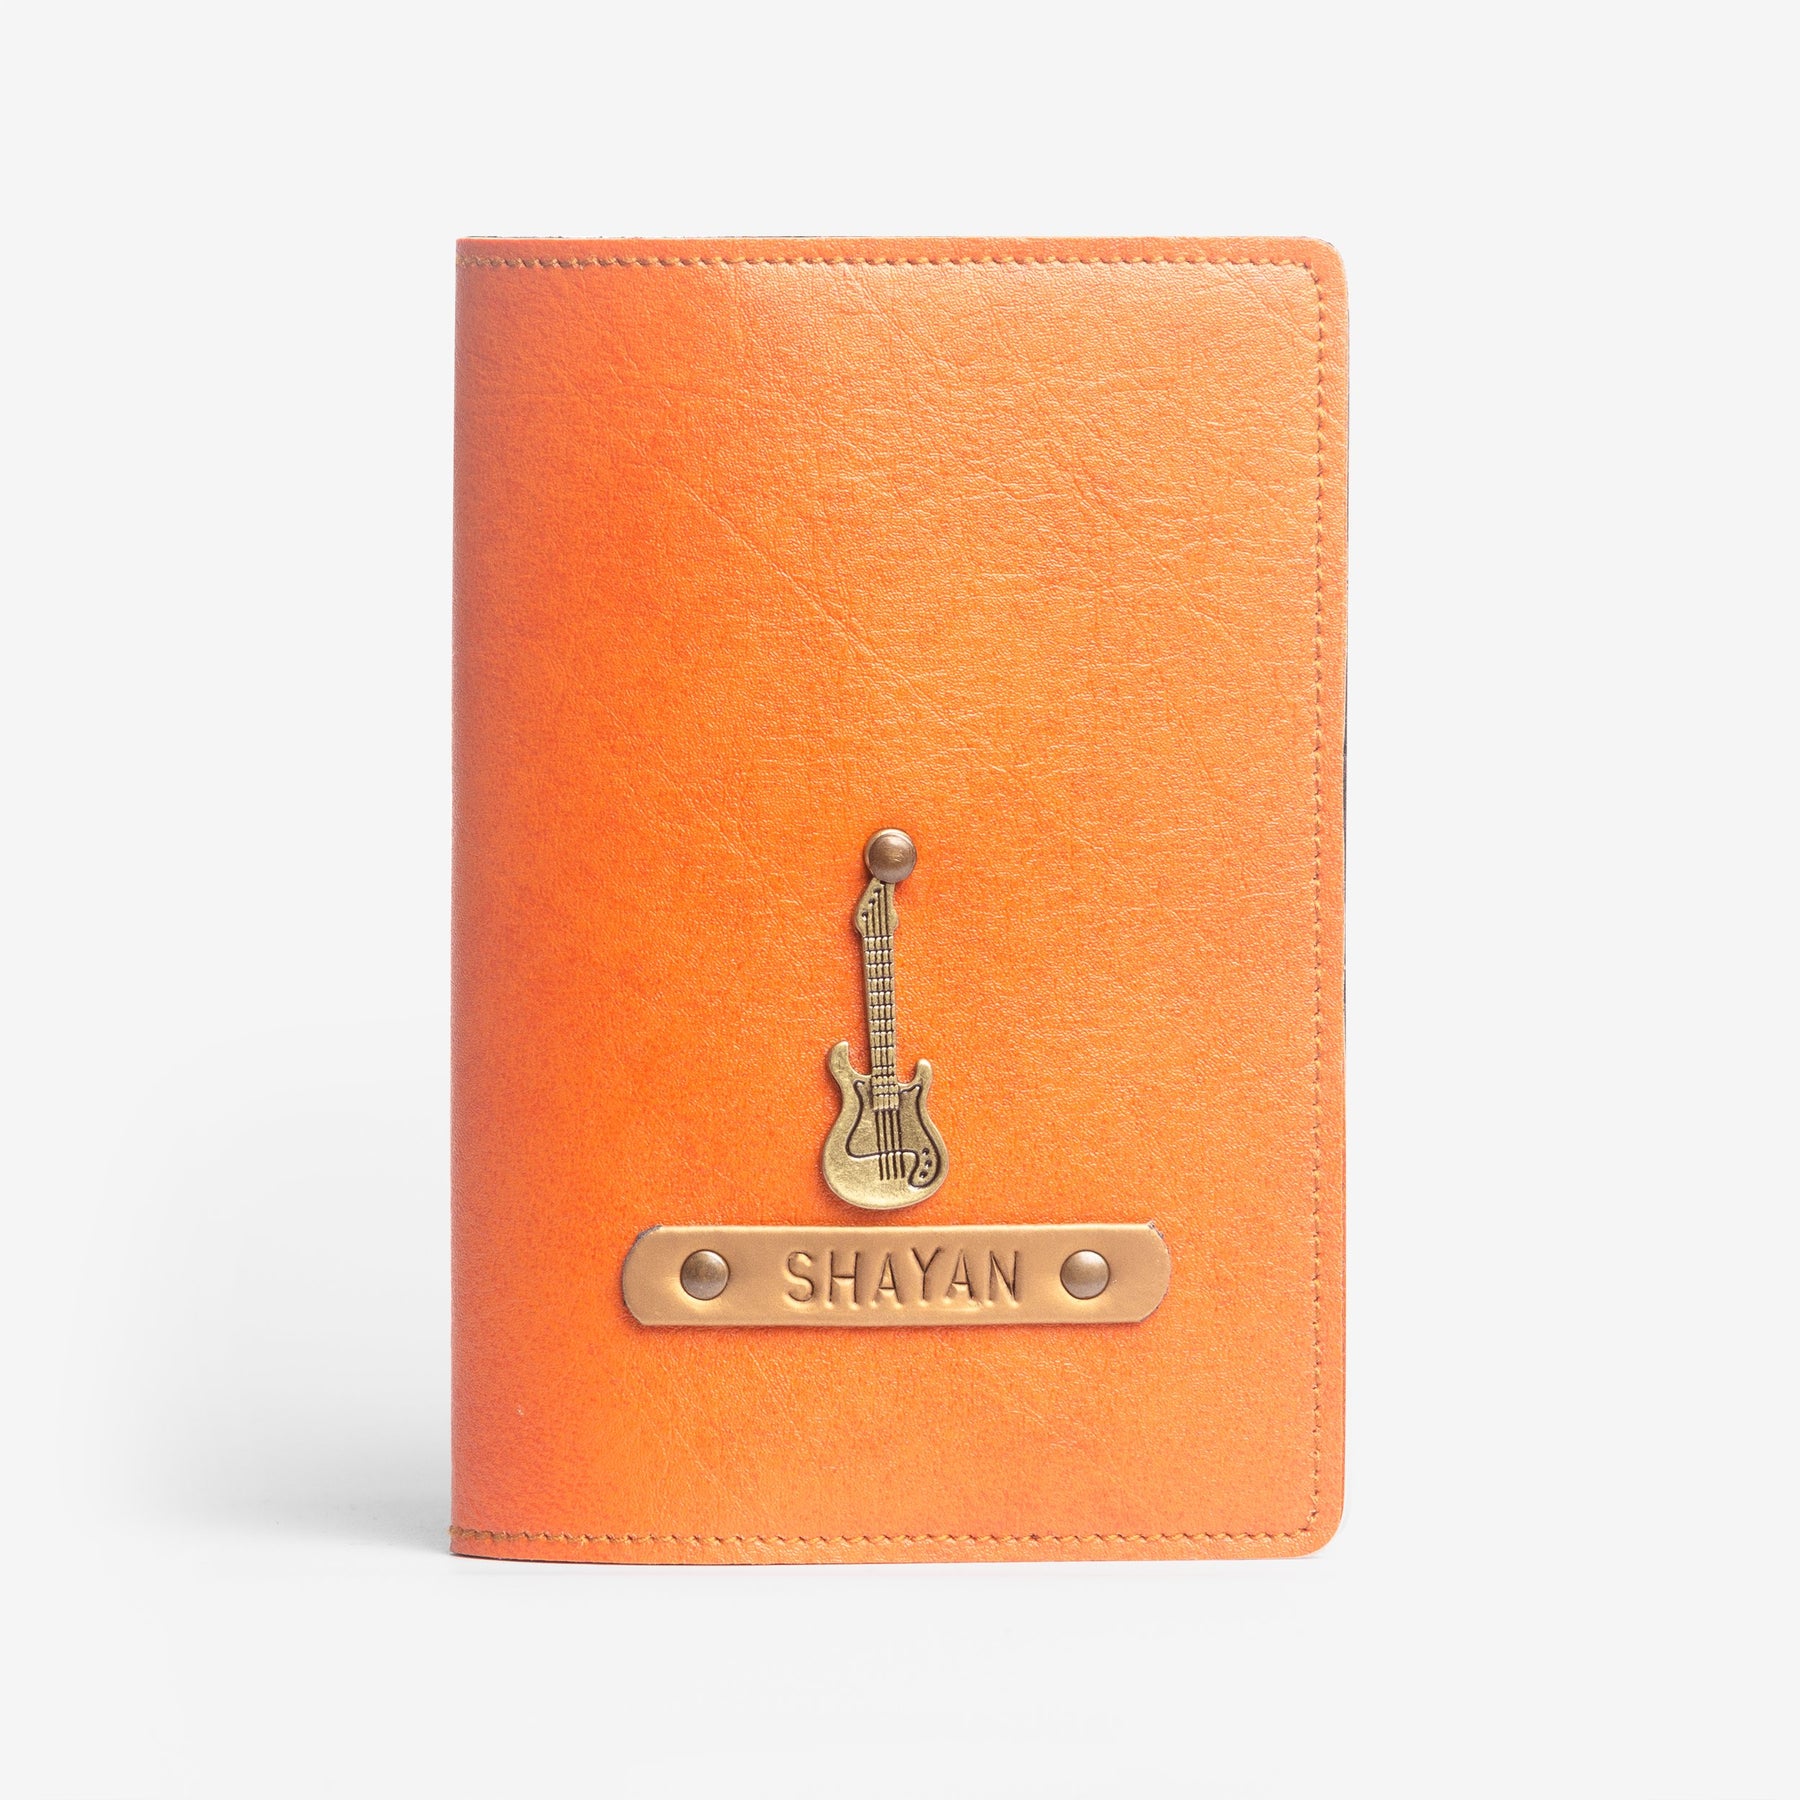 Personalized Passport Cover - Orange